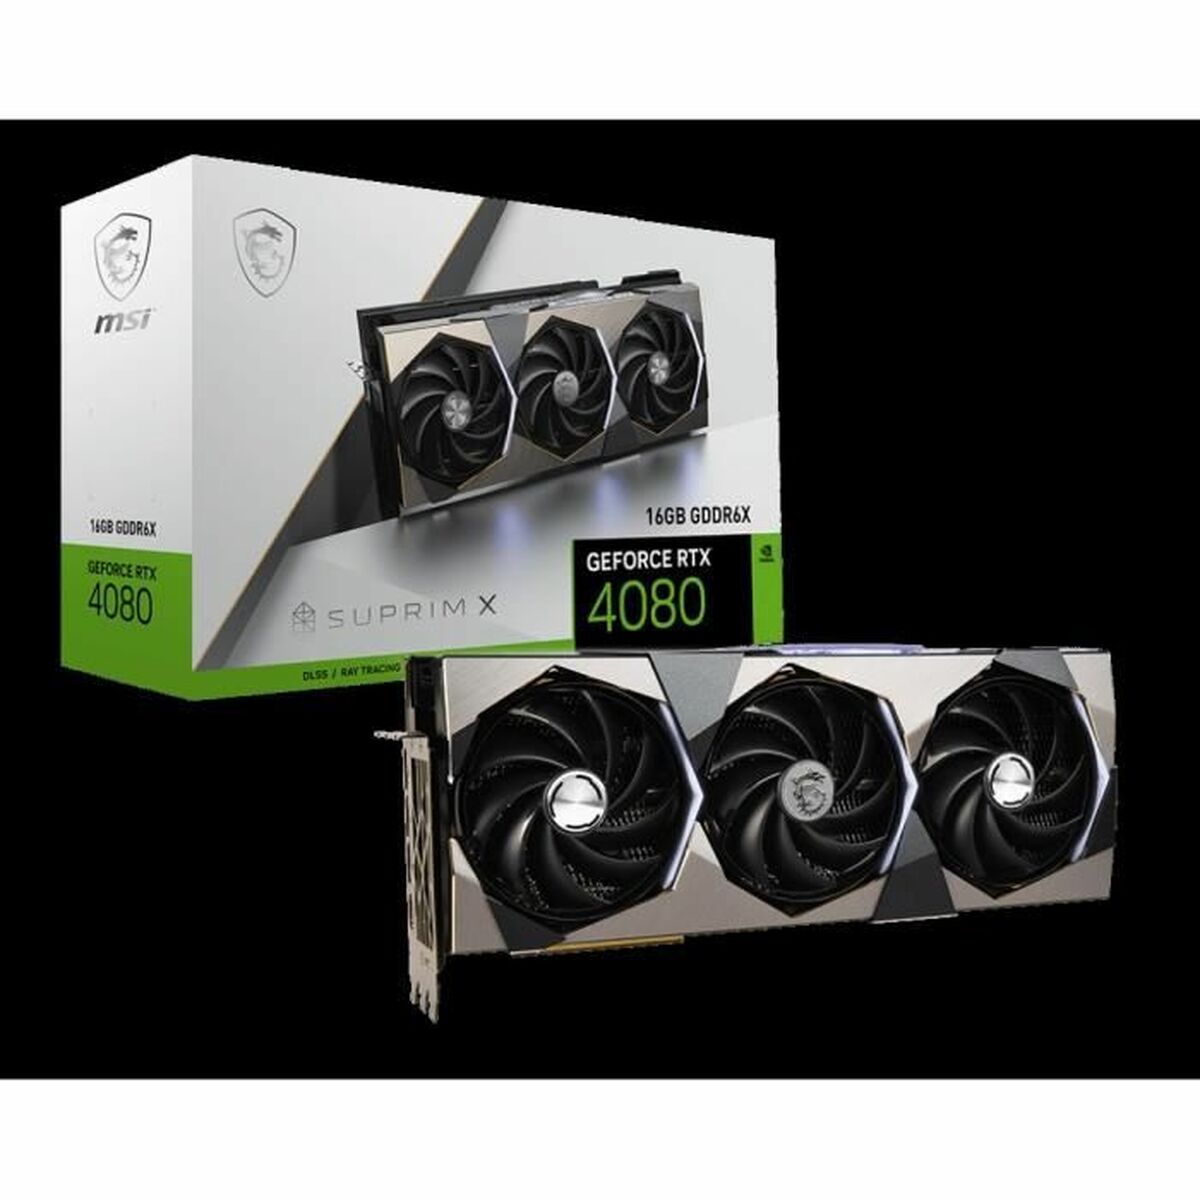 MSI GeForce RTX 4080 16GB SUPRIM X Video Card Review